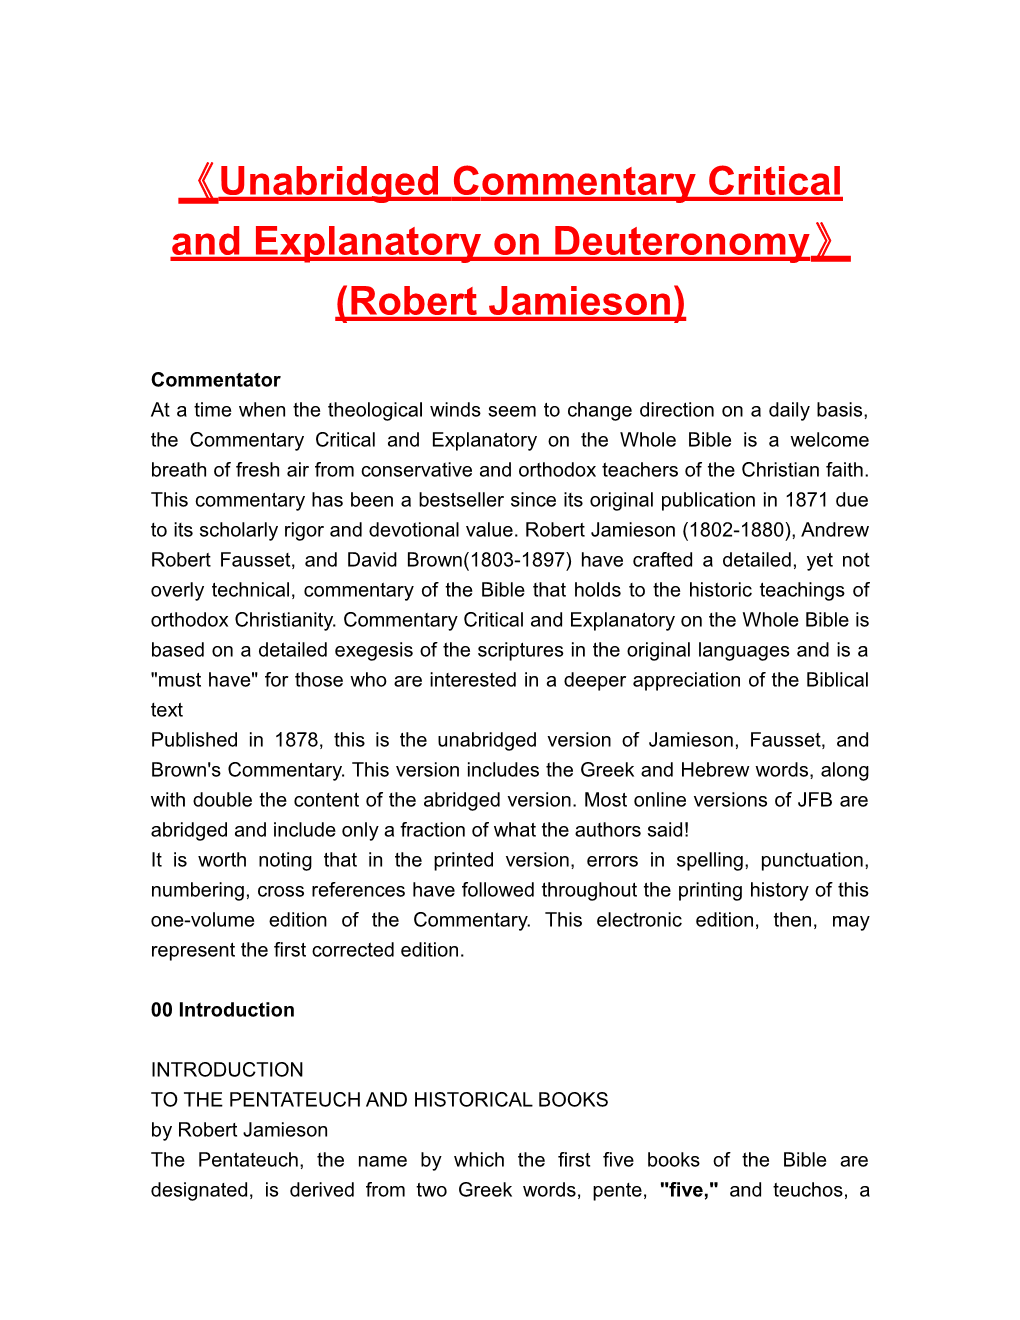 Unabridged Commentary Critical and Explanatory on Deuteronomy (Robert Jamieson)